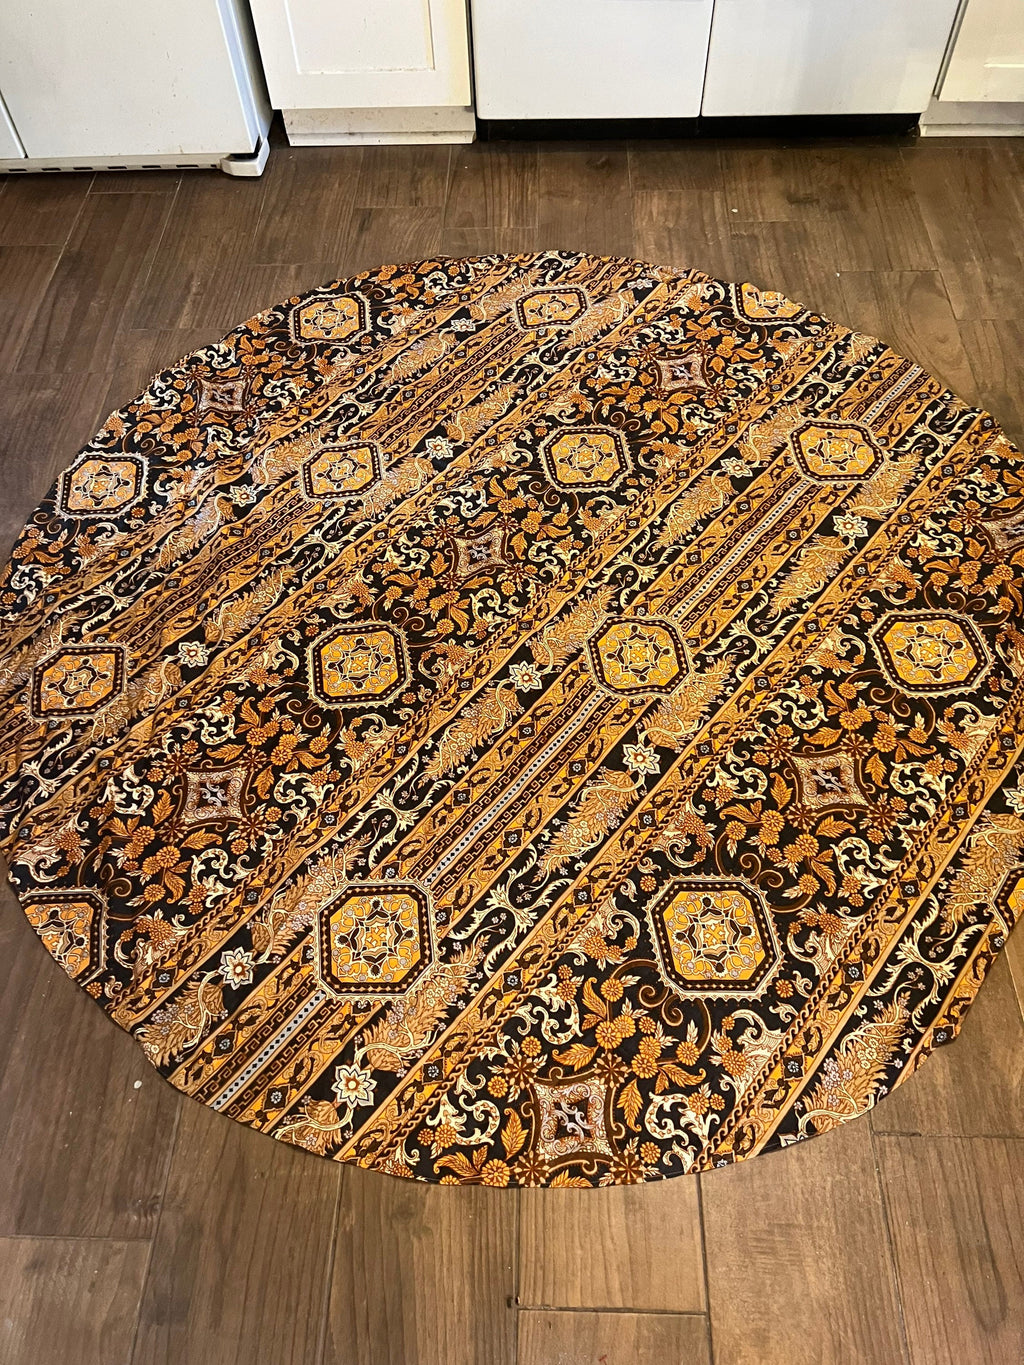 Vintage round bohemian tablecloth